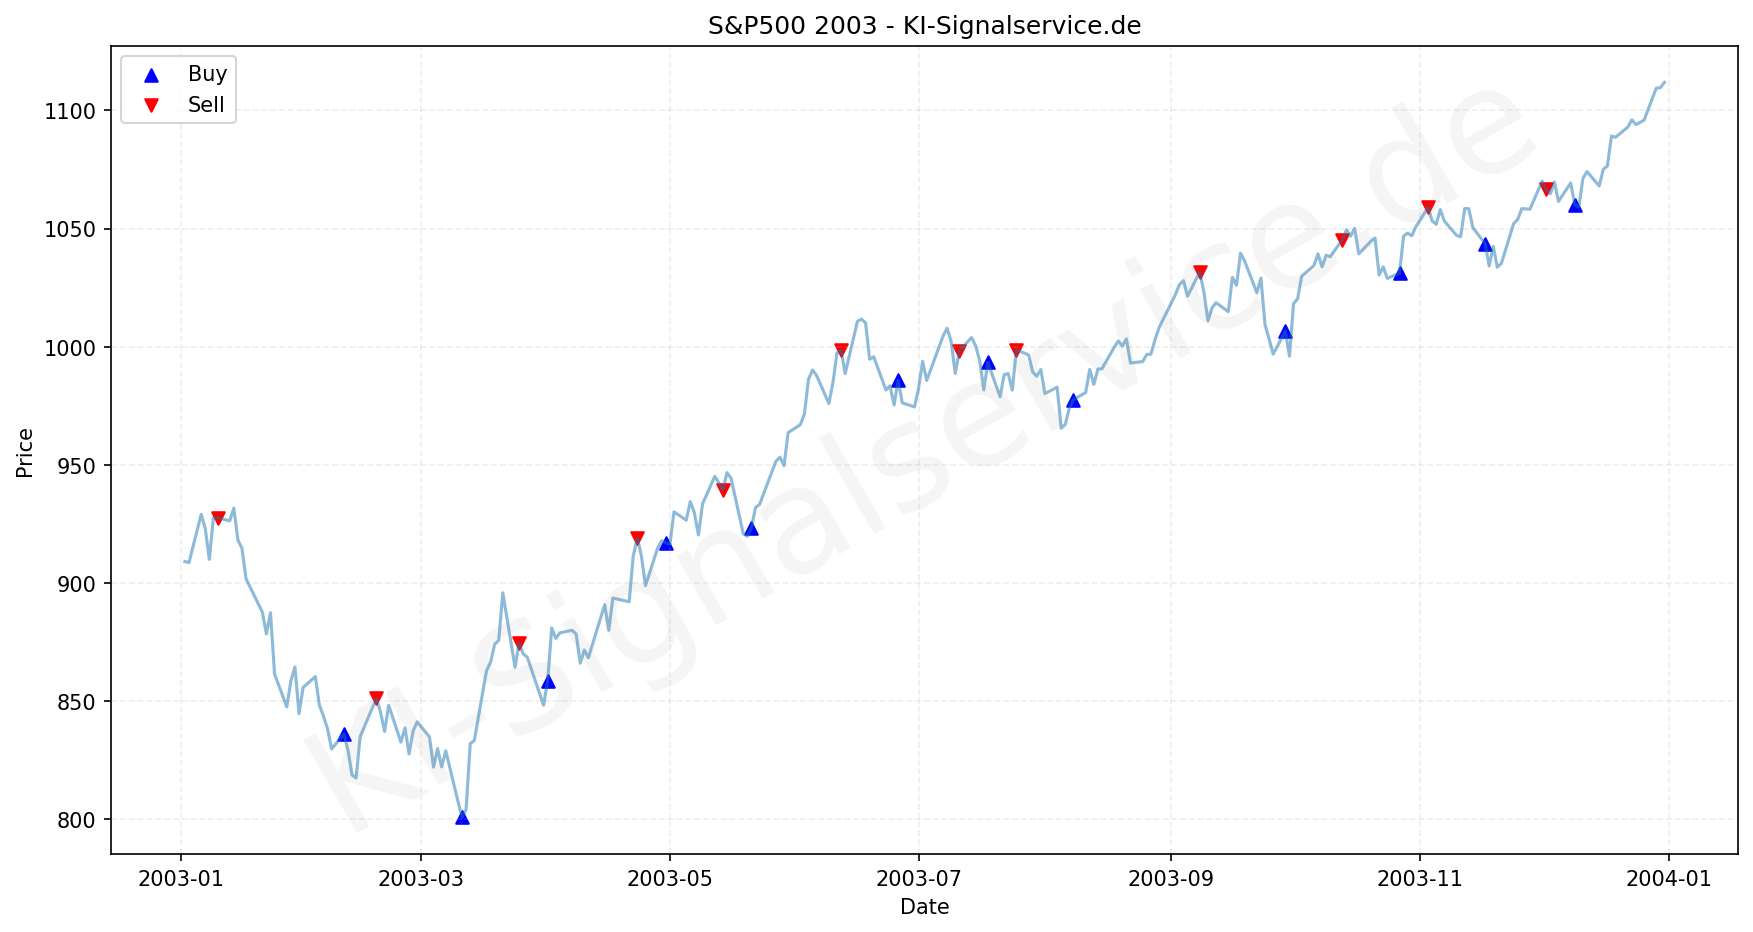 SP500 Index Performance Chart - KI Tradingsignale 2003